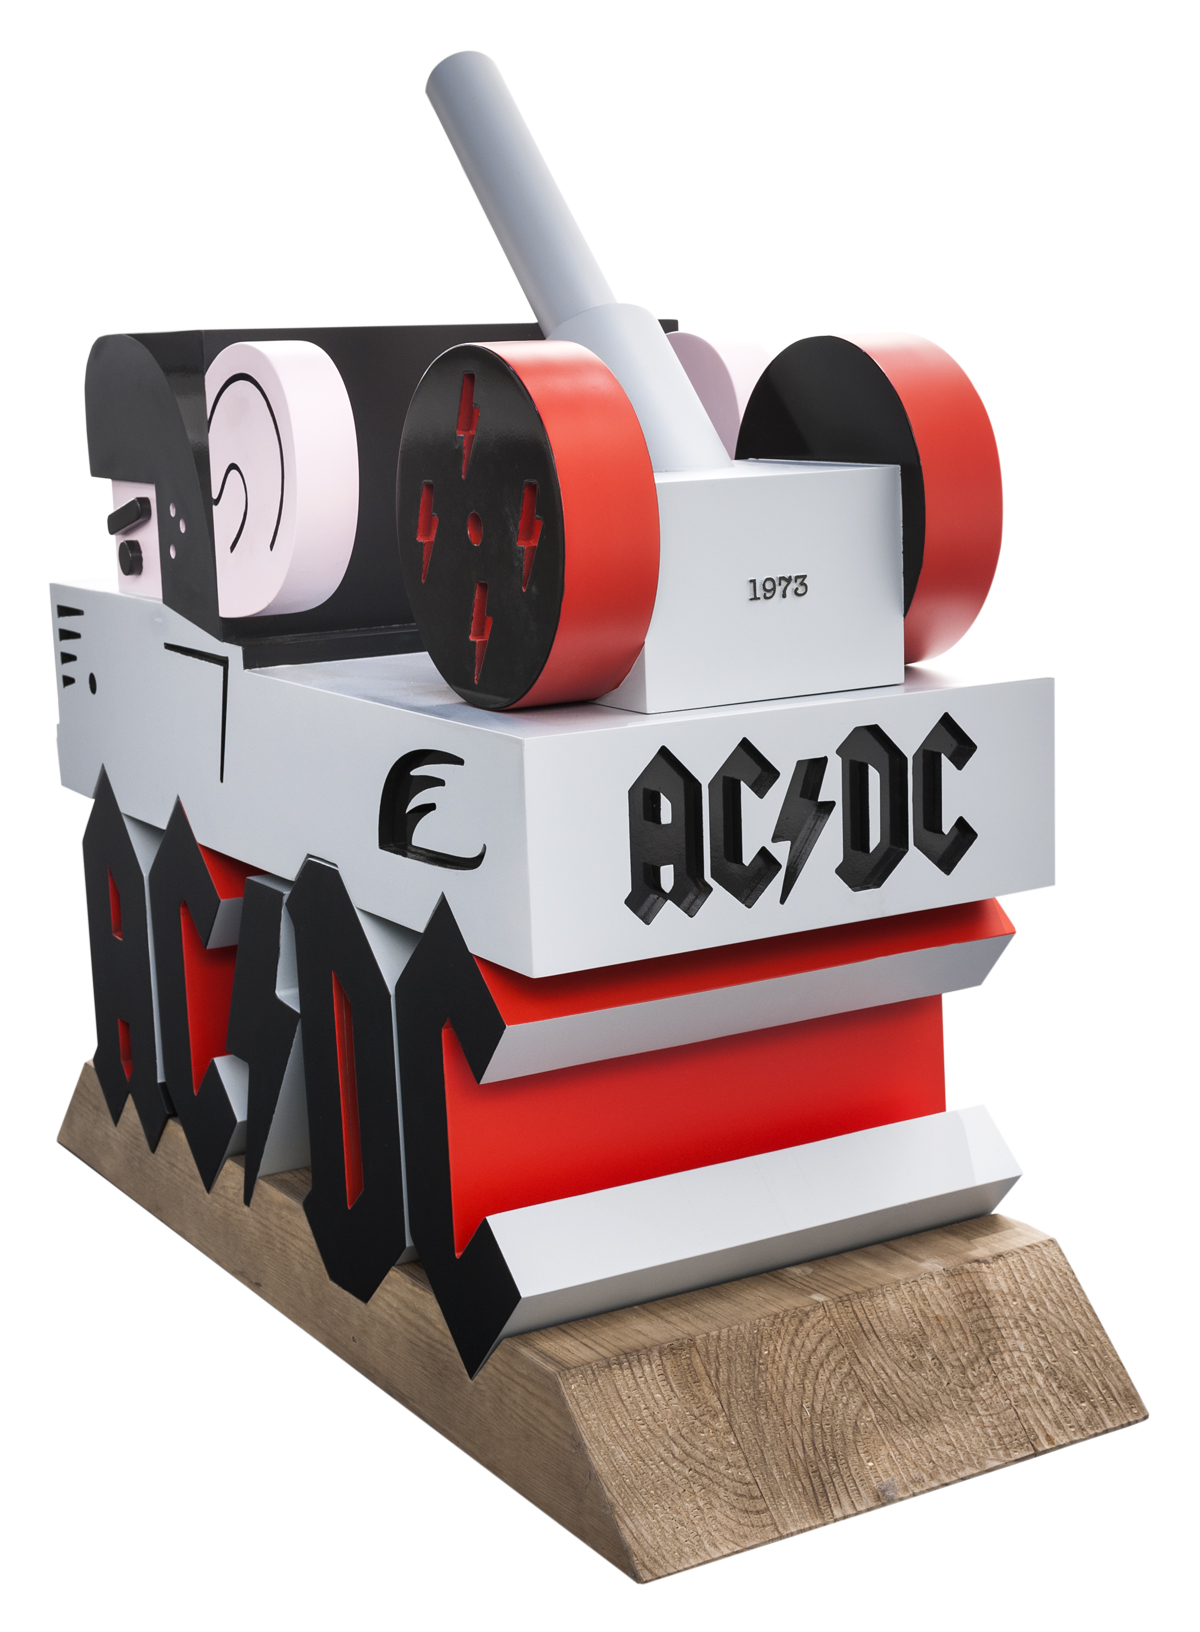 Abdul Vas. AC/DC 40th Anniversary, Wood Sculpture. 2013